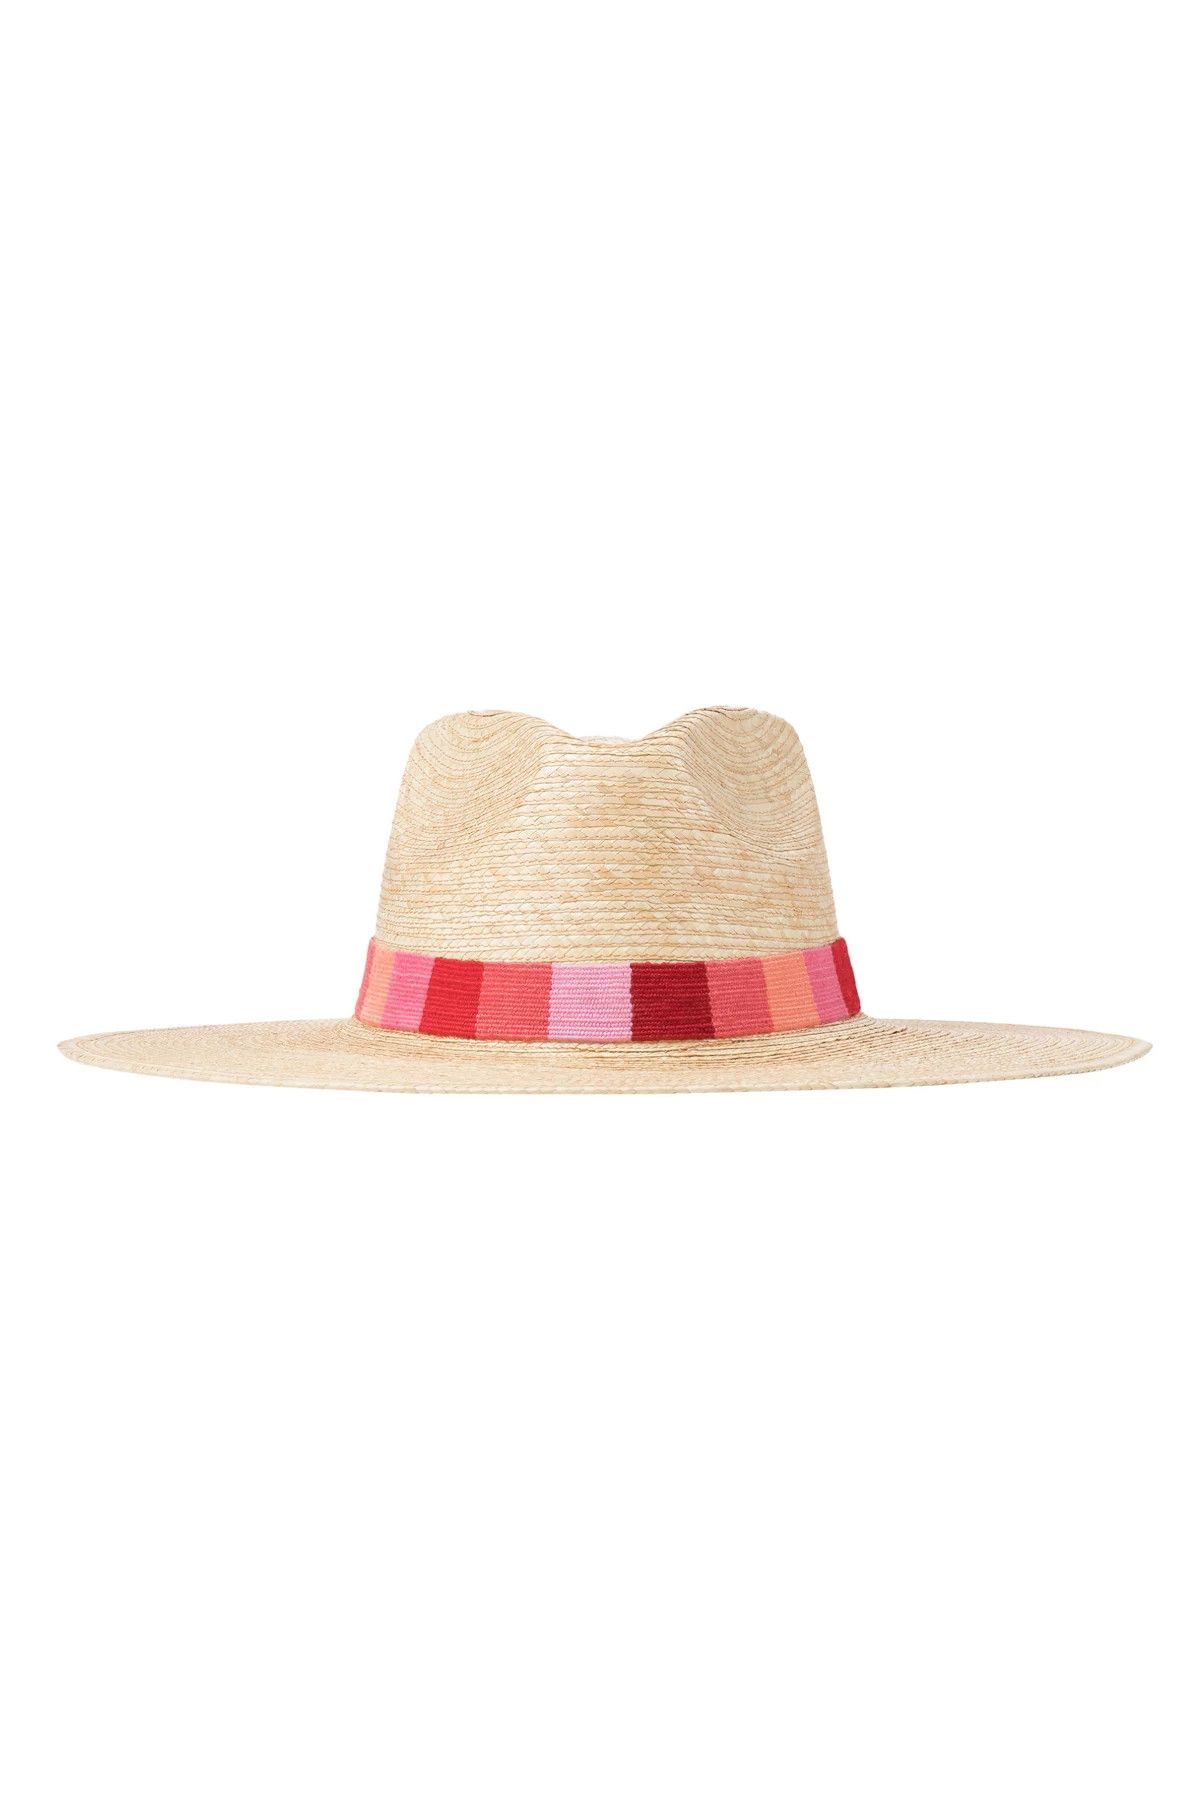 Beatriz Palm Panama Hat | Everything But Water